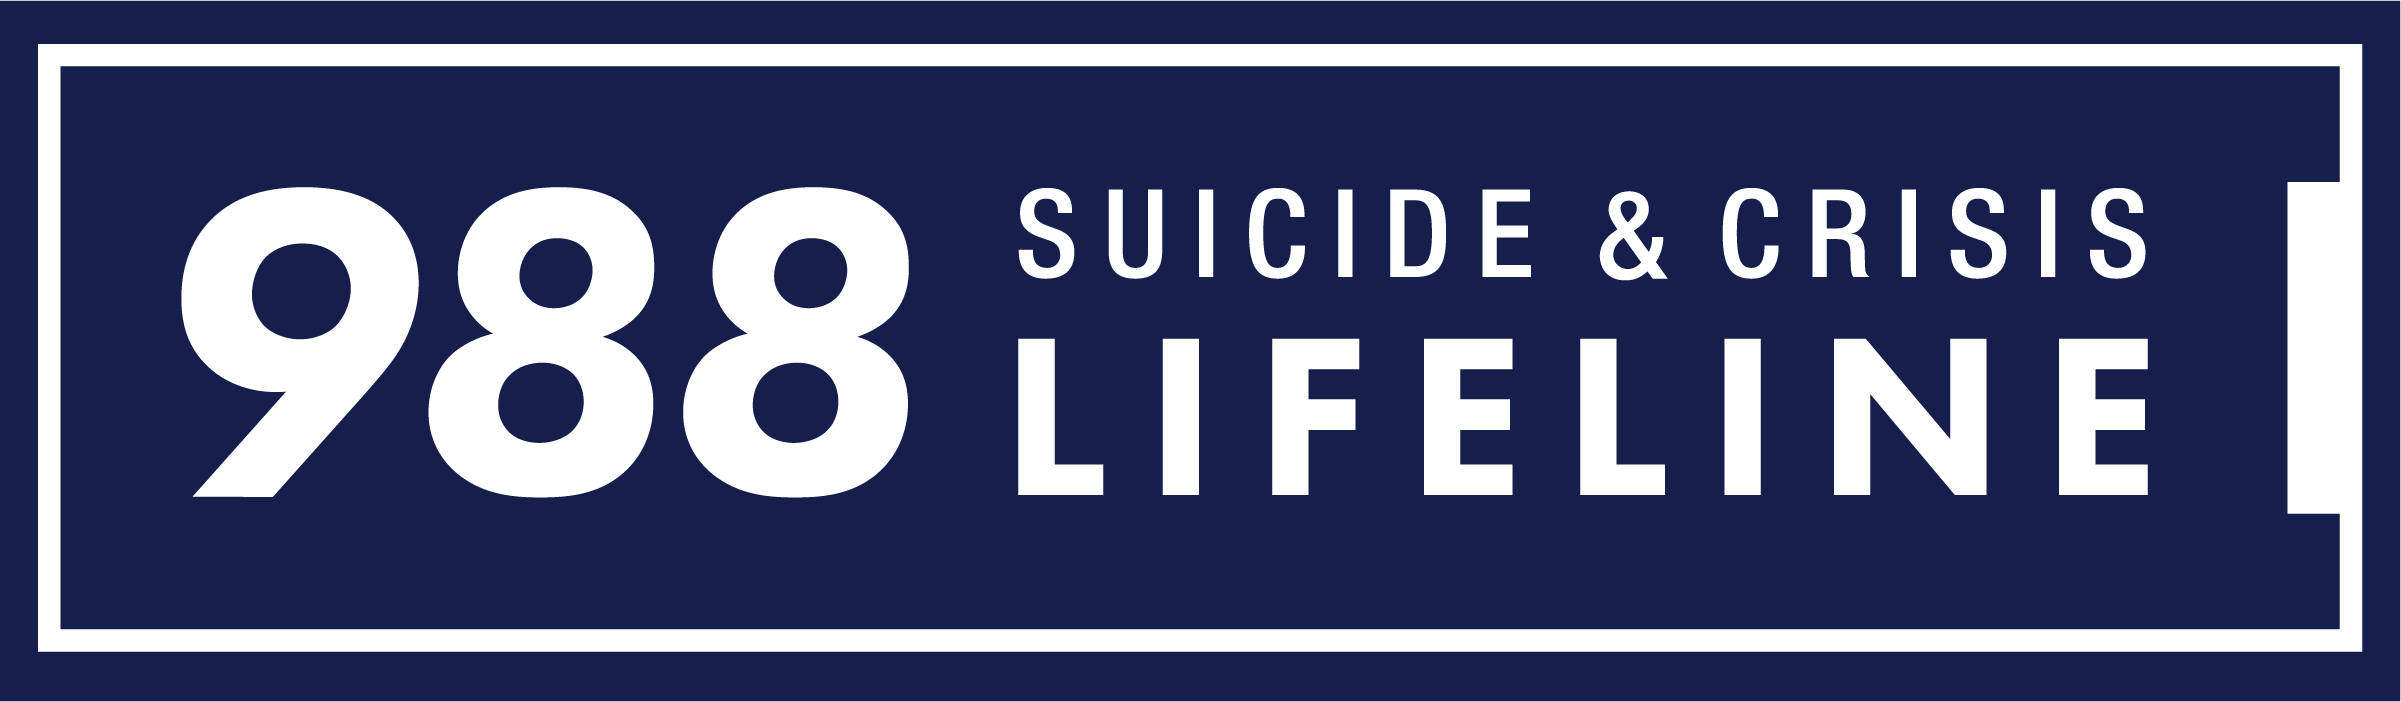 988 Suicide & Crisis Lifeline Logo English